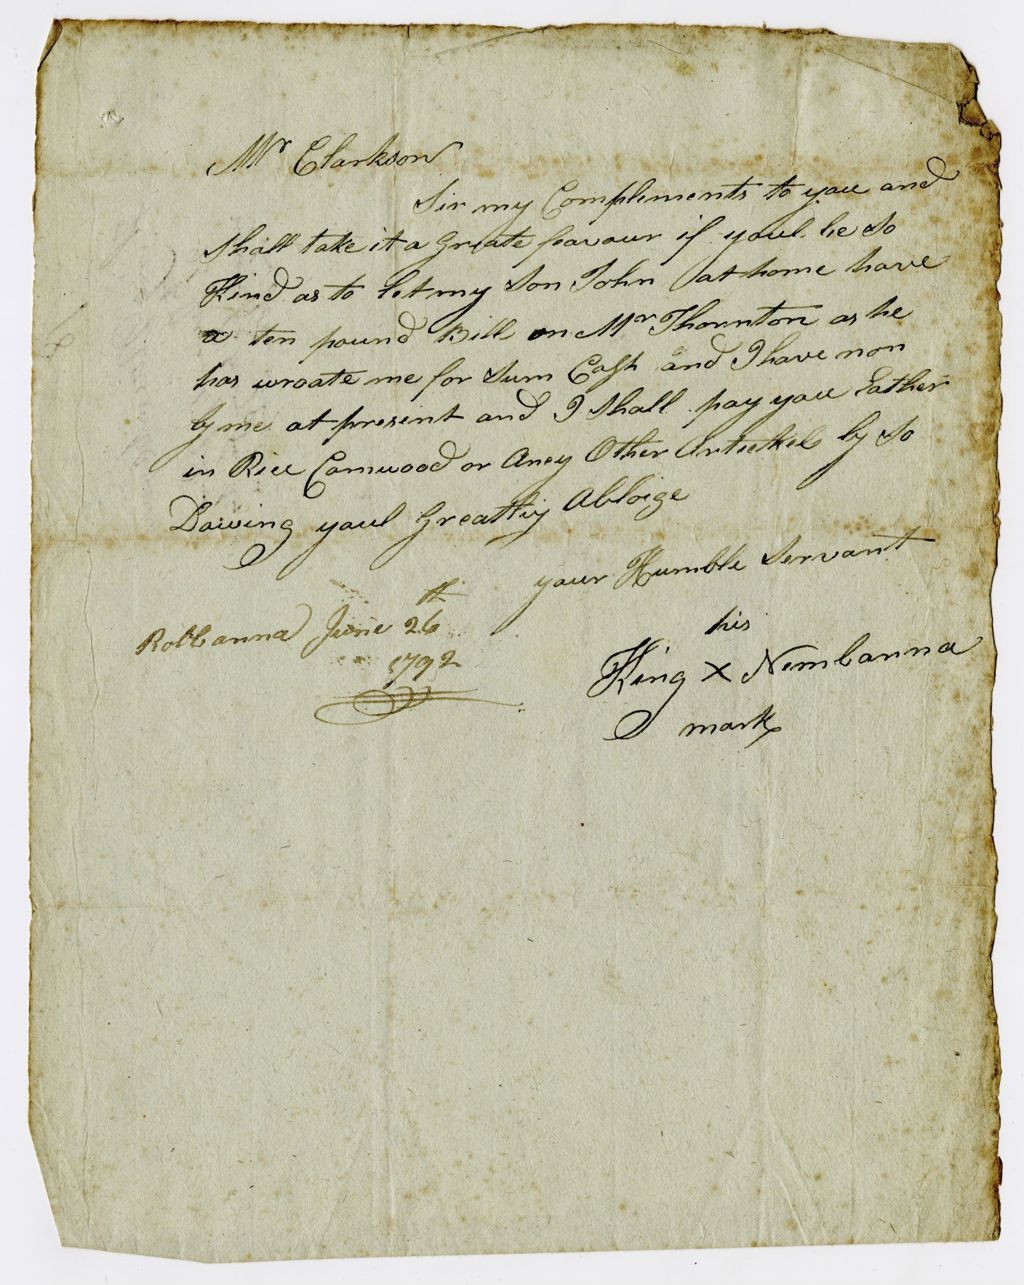 Letter from King Naimbanna to John Clarkson, June 26, 1792